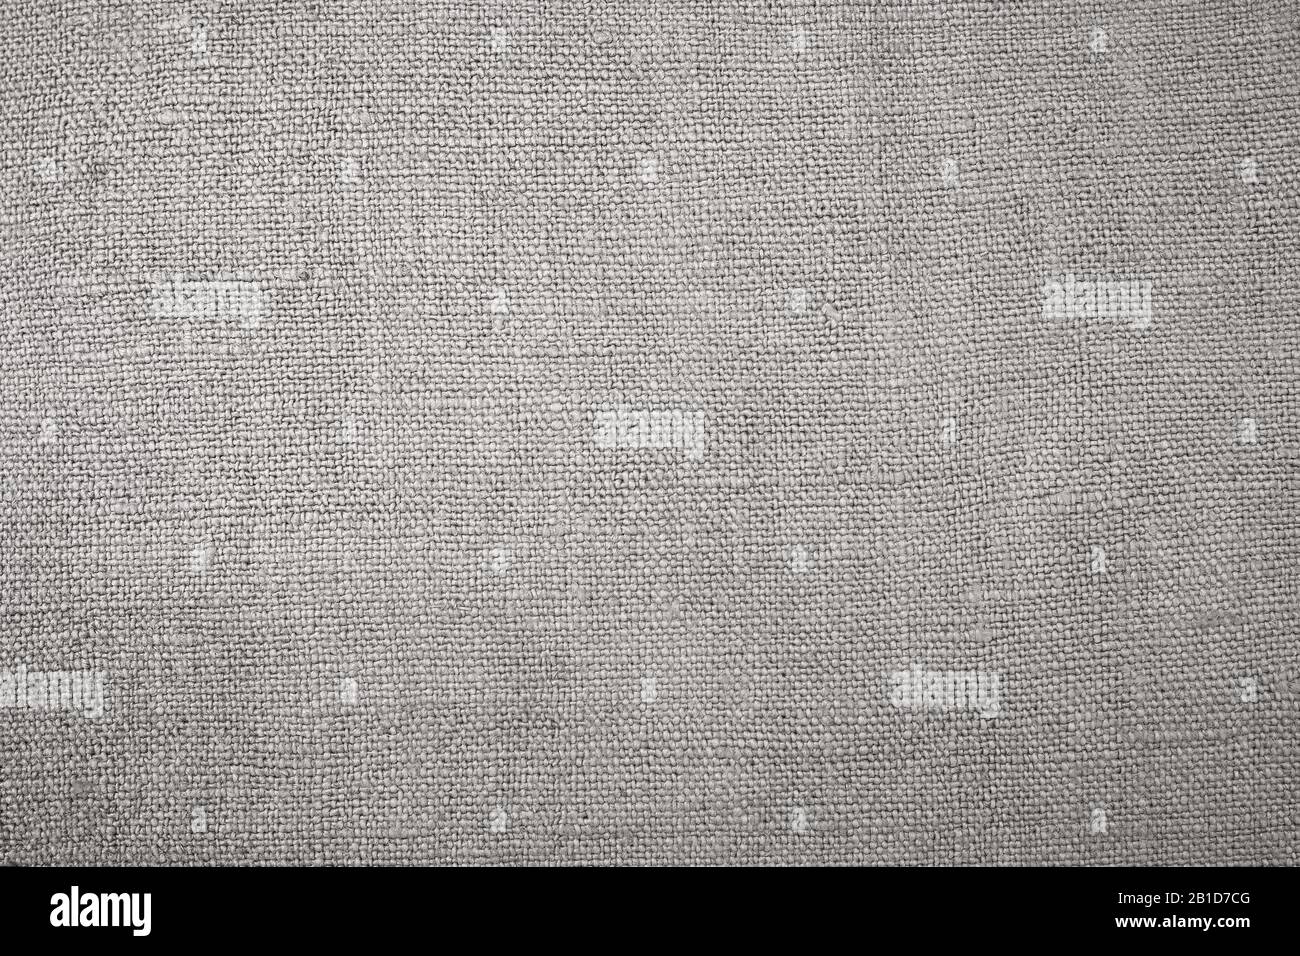 Gray handmade fabric texture. Abstract background Stock Photo